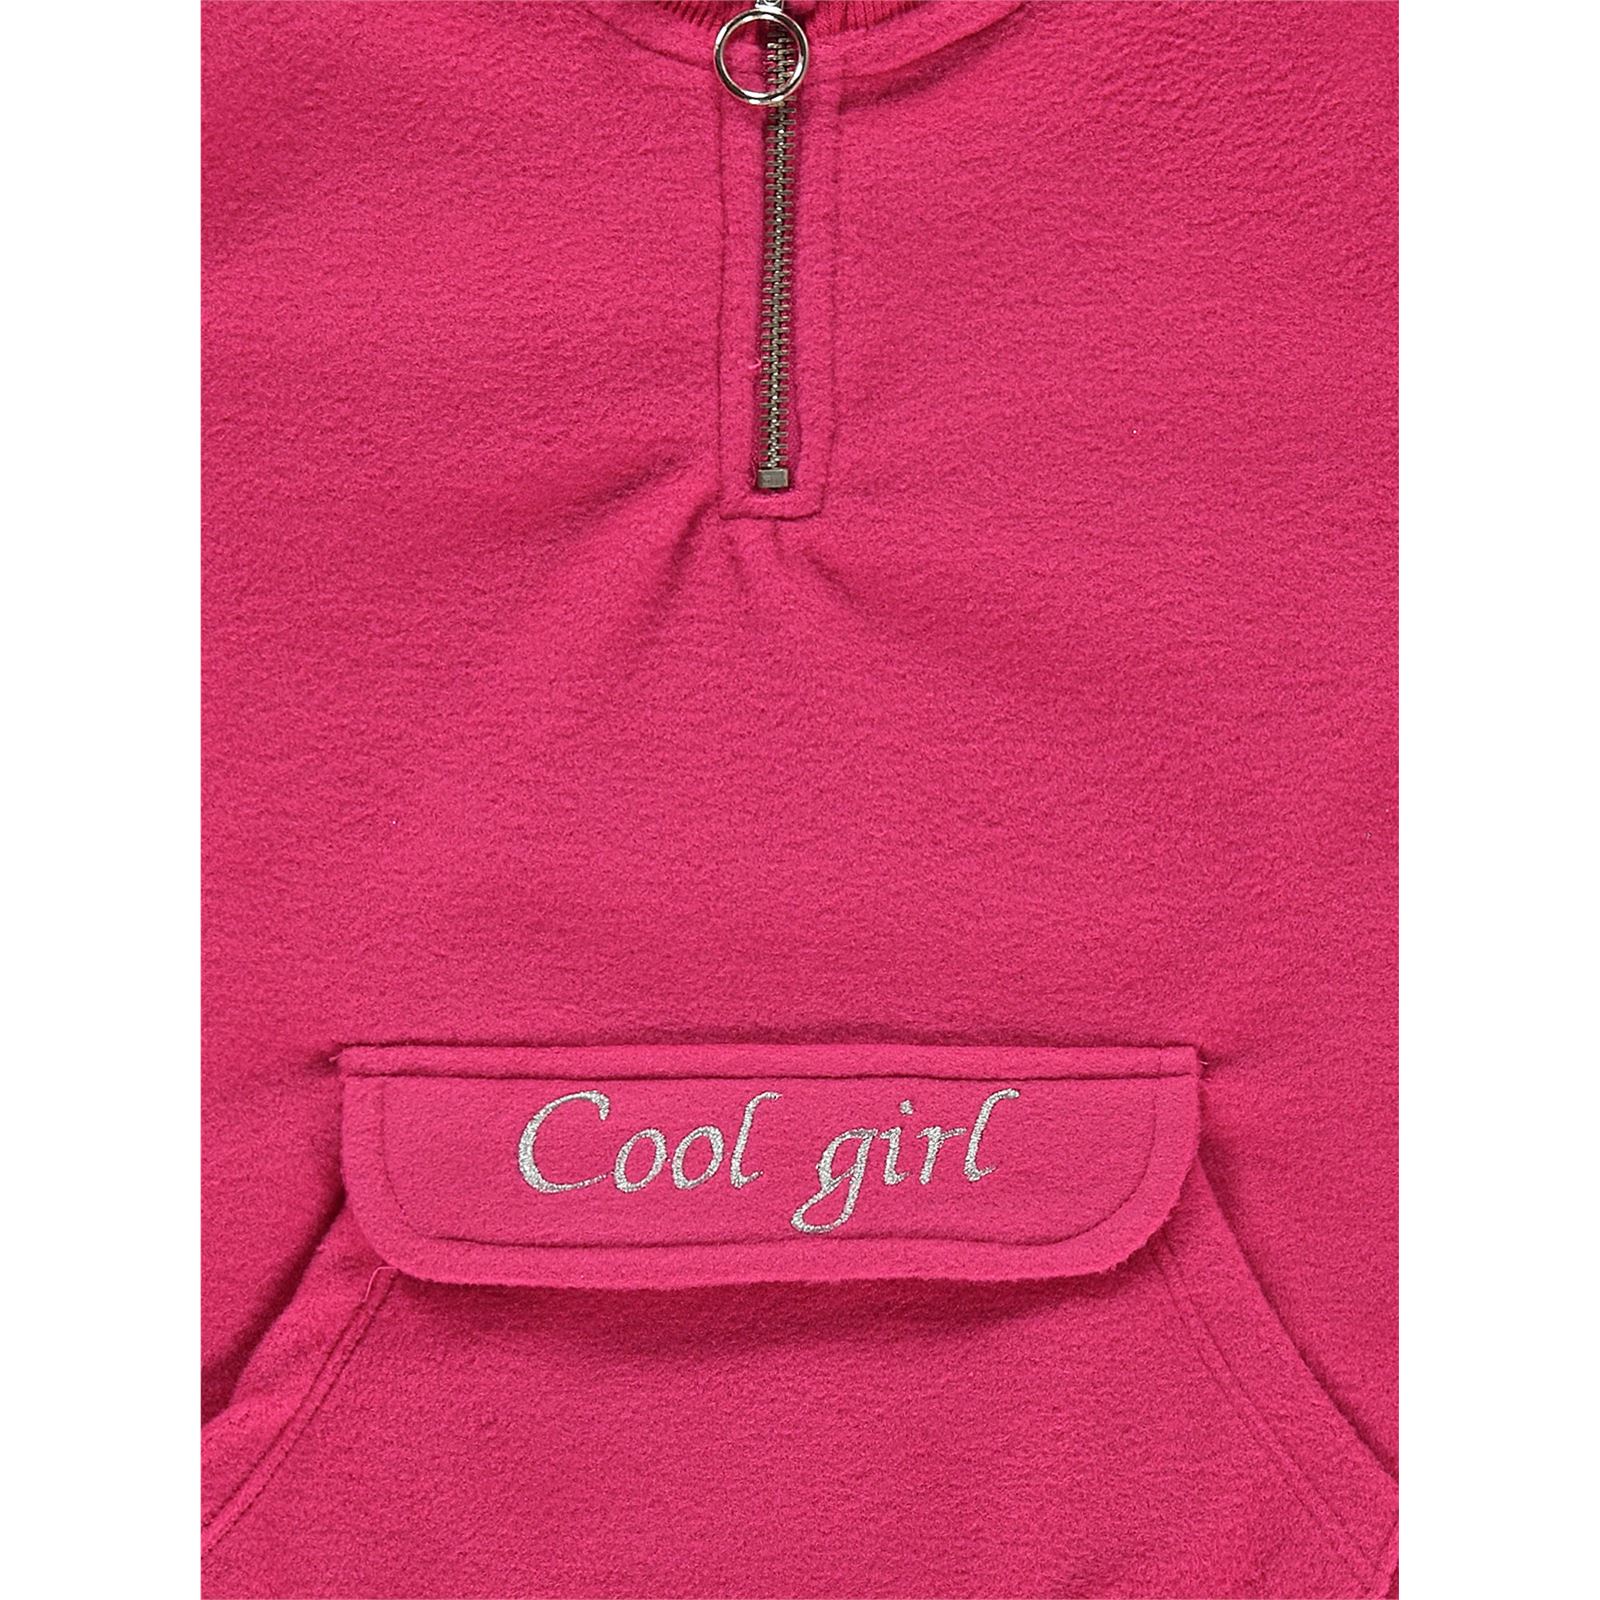 Civil Girls Kız Çocuk Sweatshirt 6-9 Yaş Fuşya